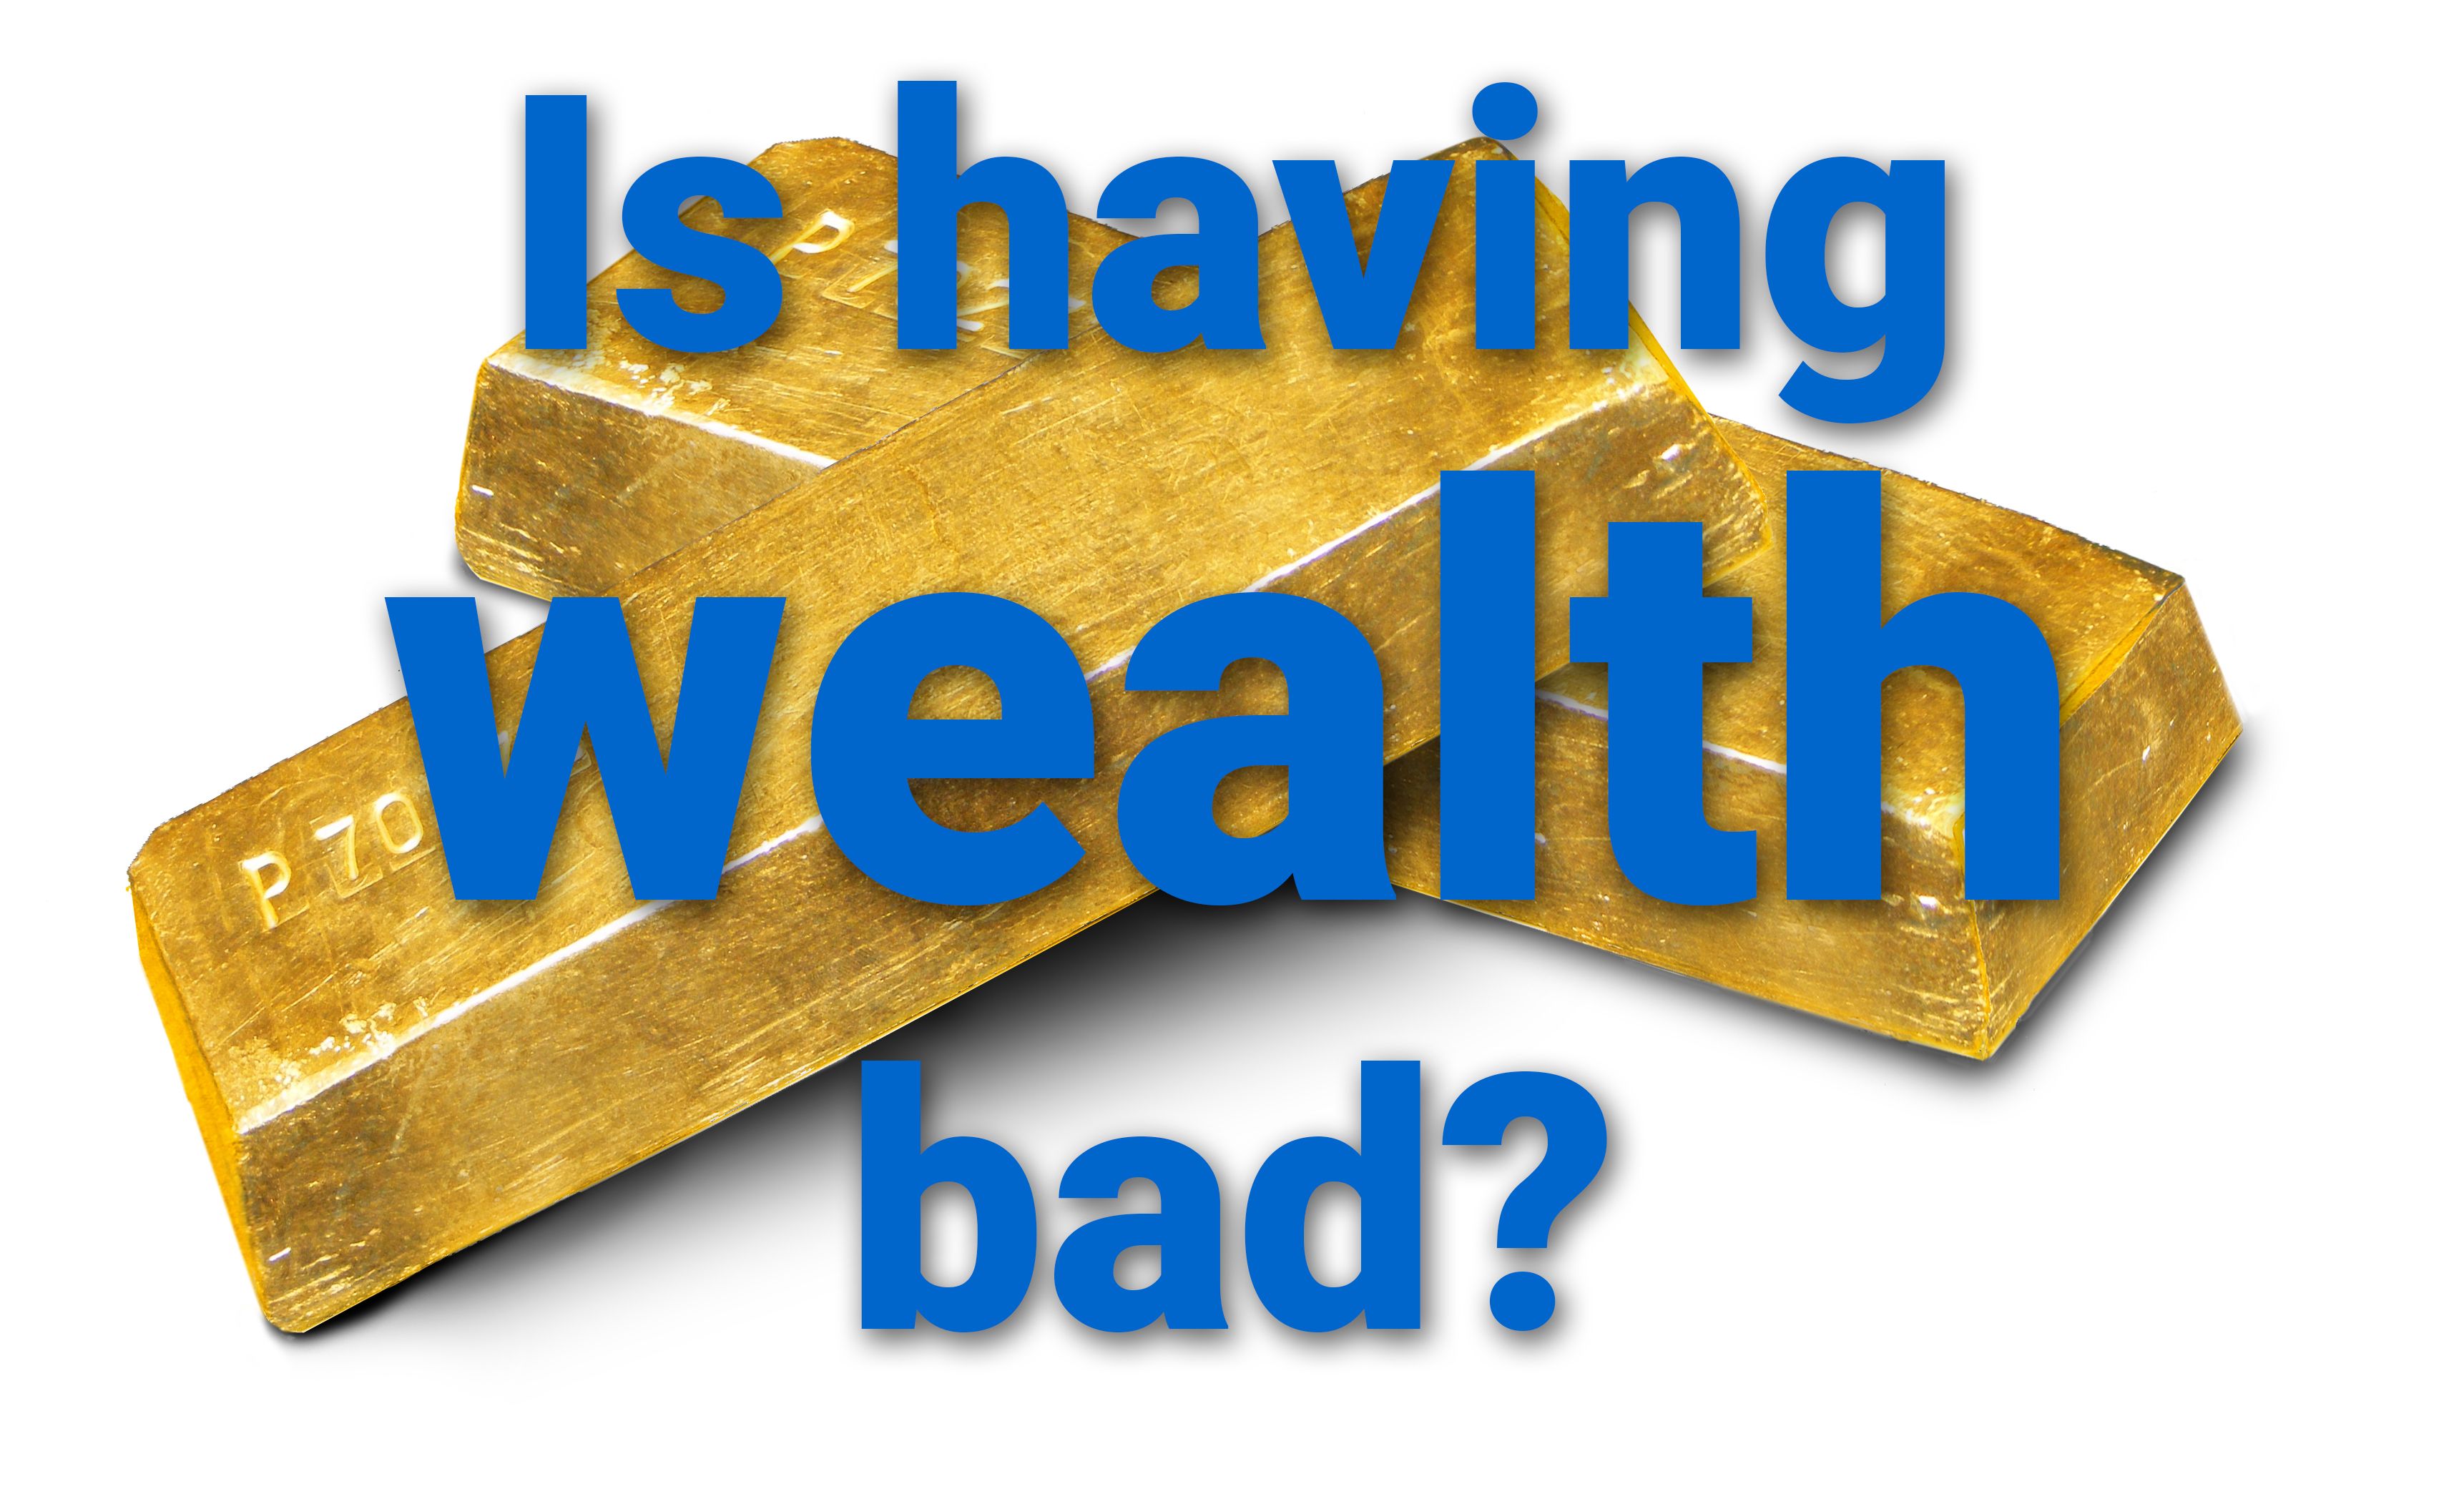 wealth_bad.jpg